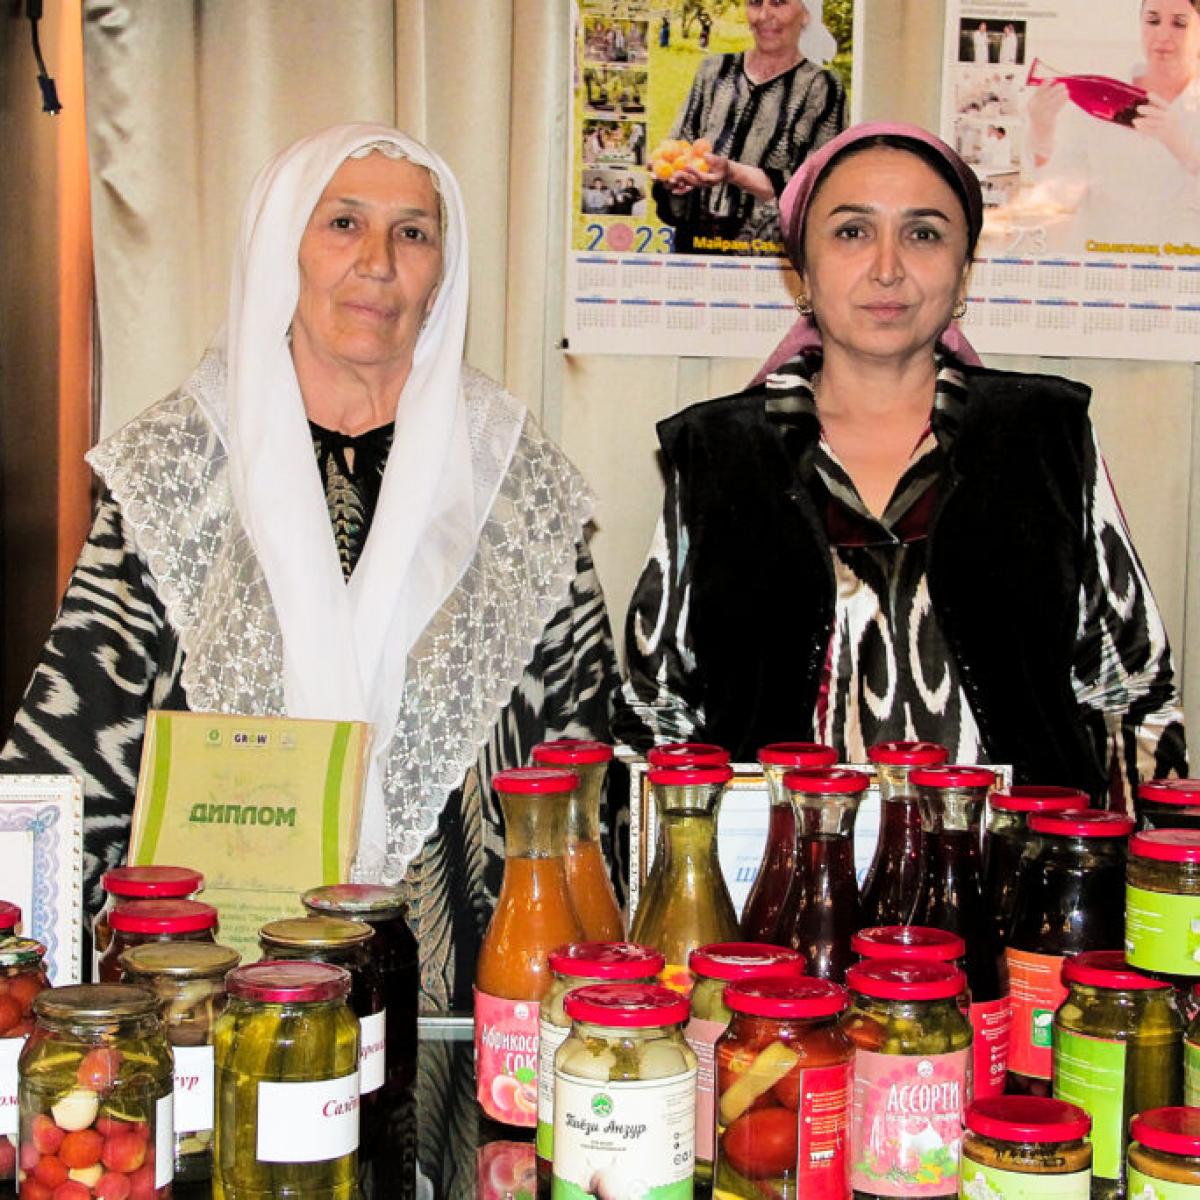 USAID’s Groundbreakers – The Fearless 15: Empowering Women Entrepreneurship in Khatlon Region